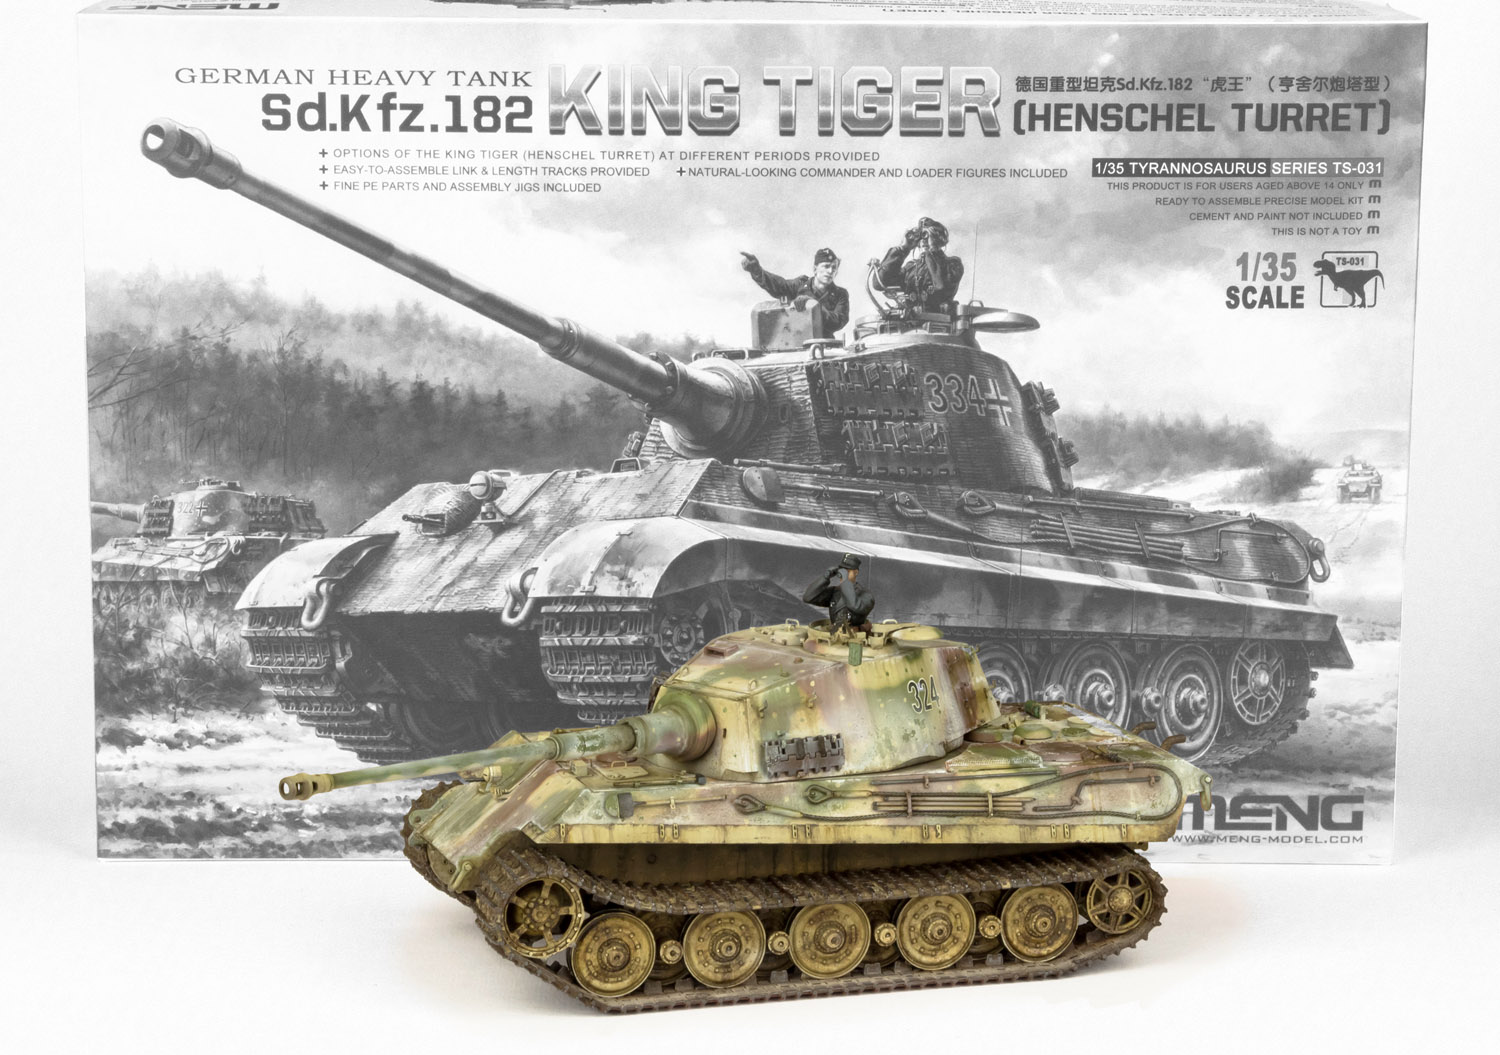 Meng model 1/35 TS-031 german Sd.kfz.182 king tiger henschel turret 